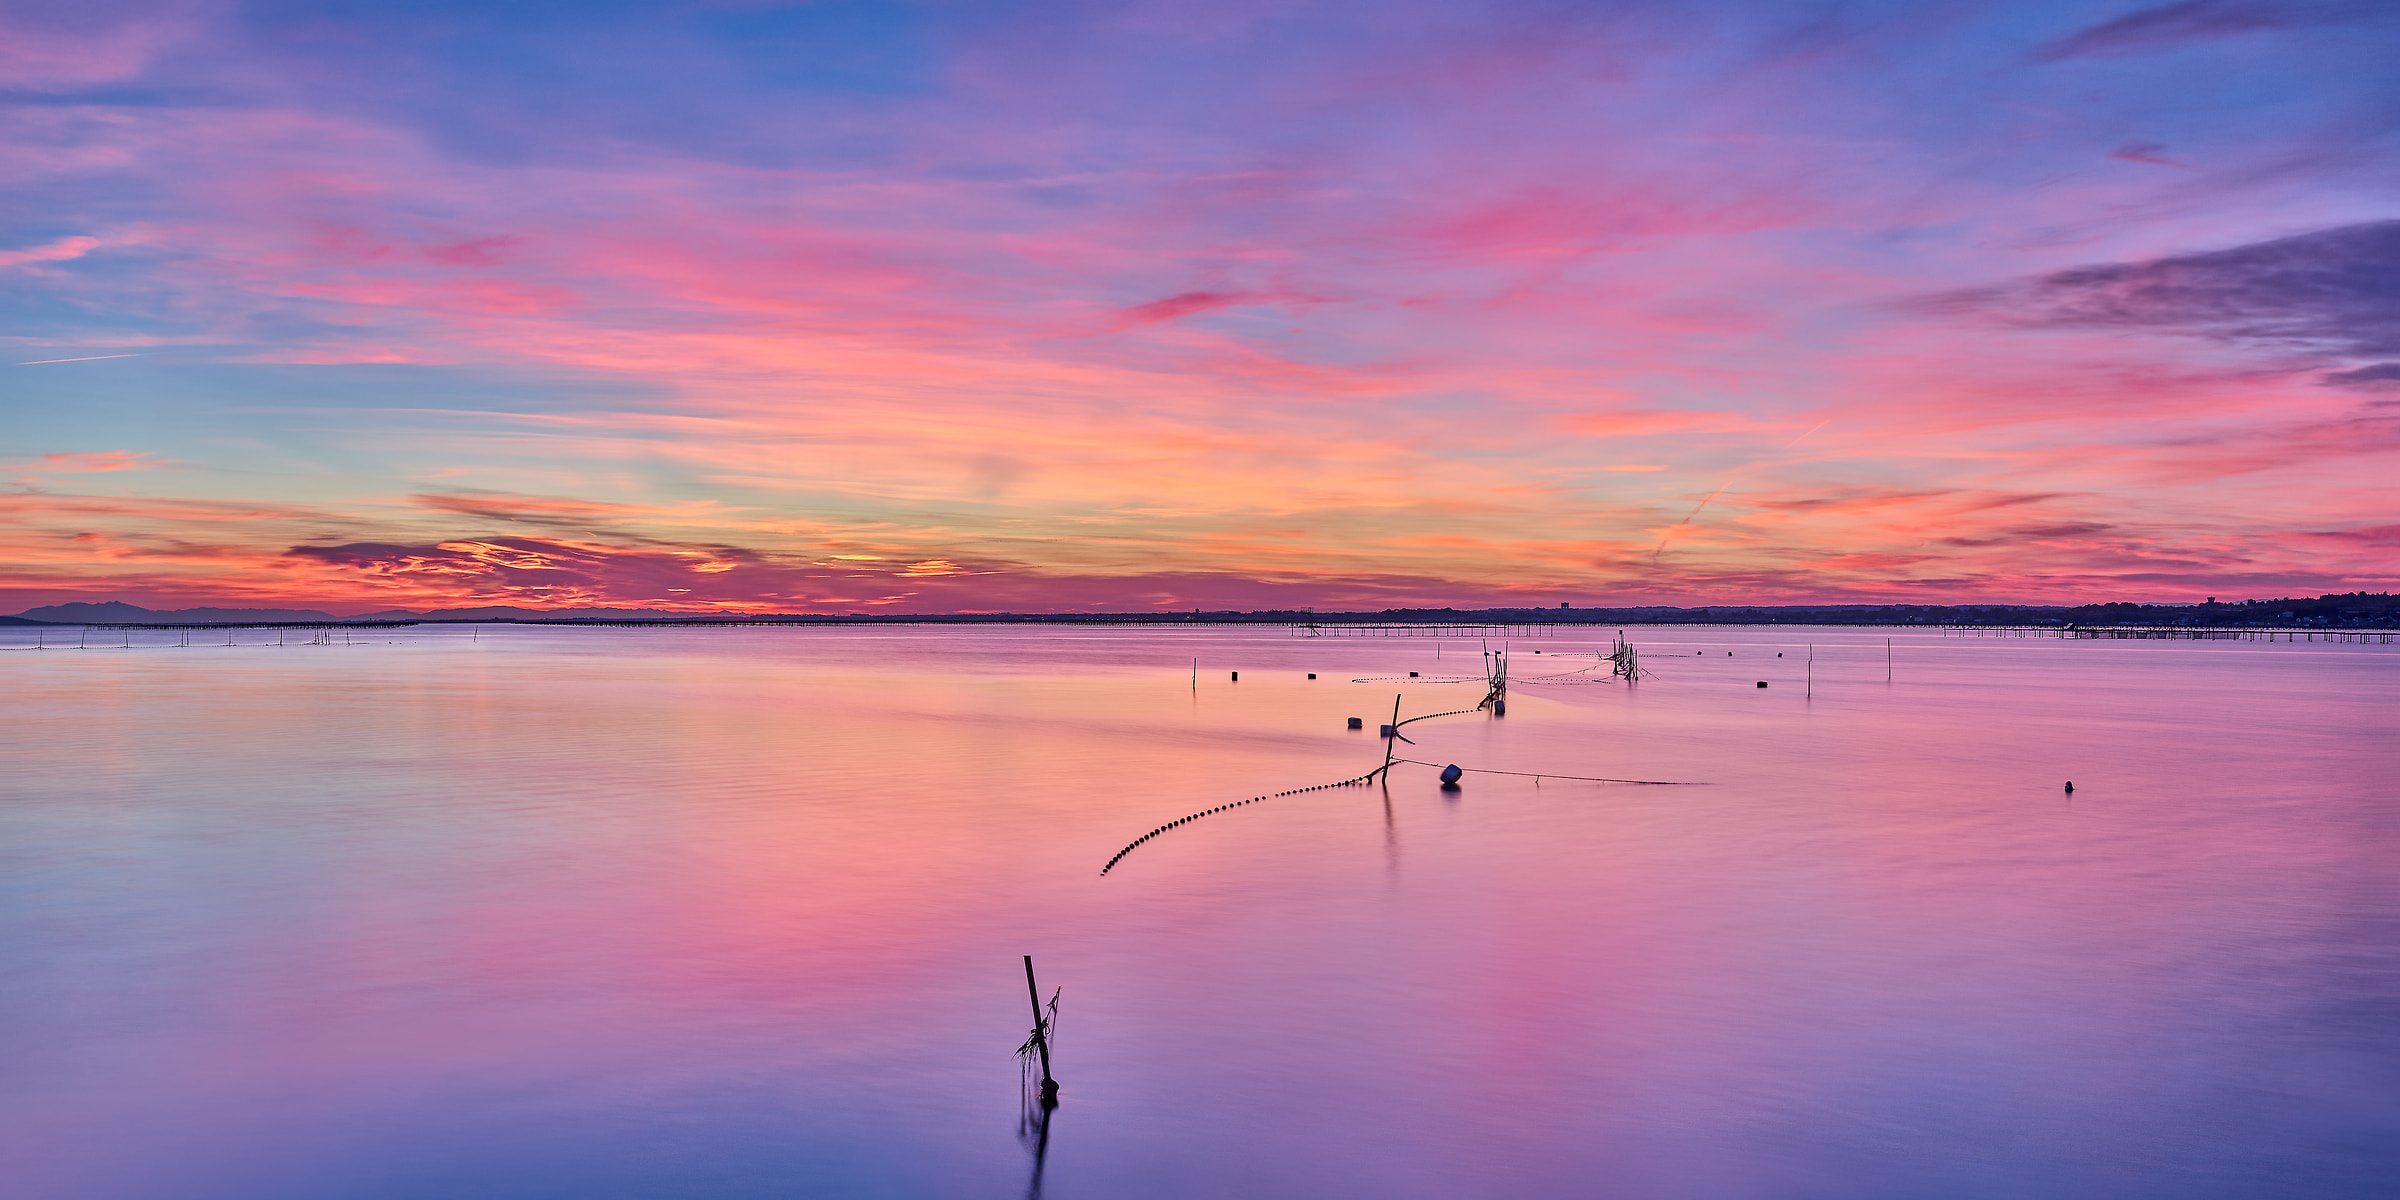 153 megapixels! A very high resolution, large VAST photo print of a sunset over water; landscape photograph created by David Meaux in l'Étang de Thau, Balaruc-les-Bains, l'Hérault, France